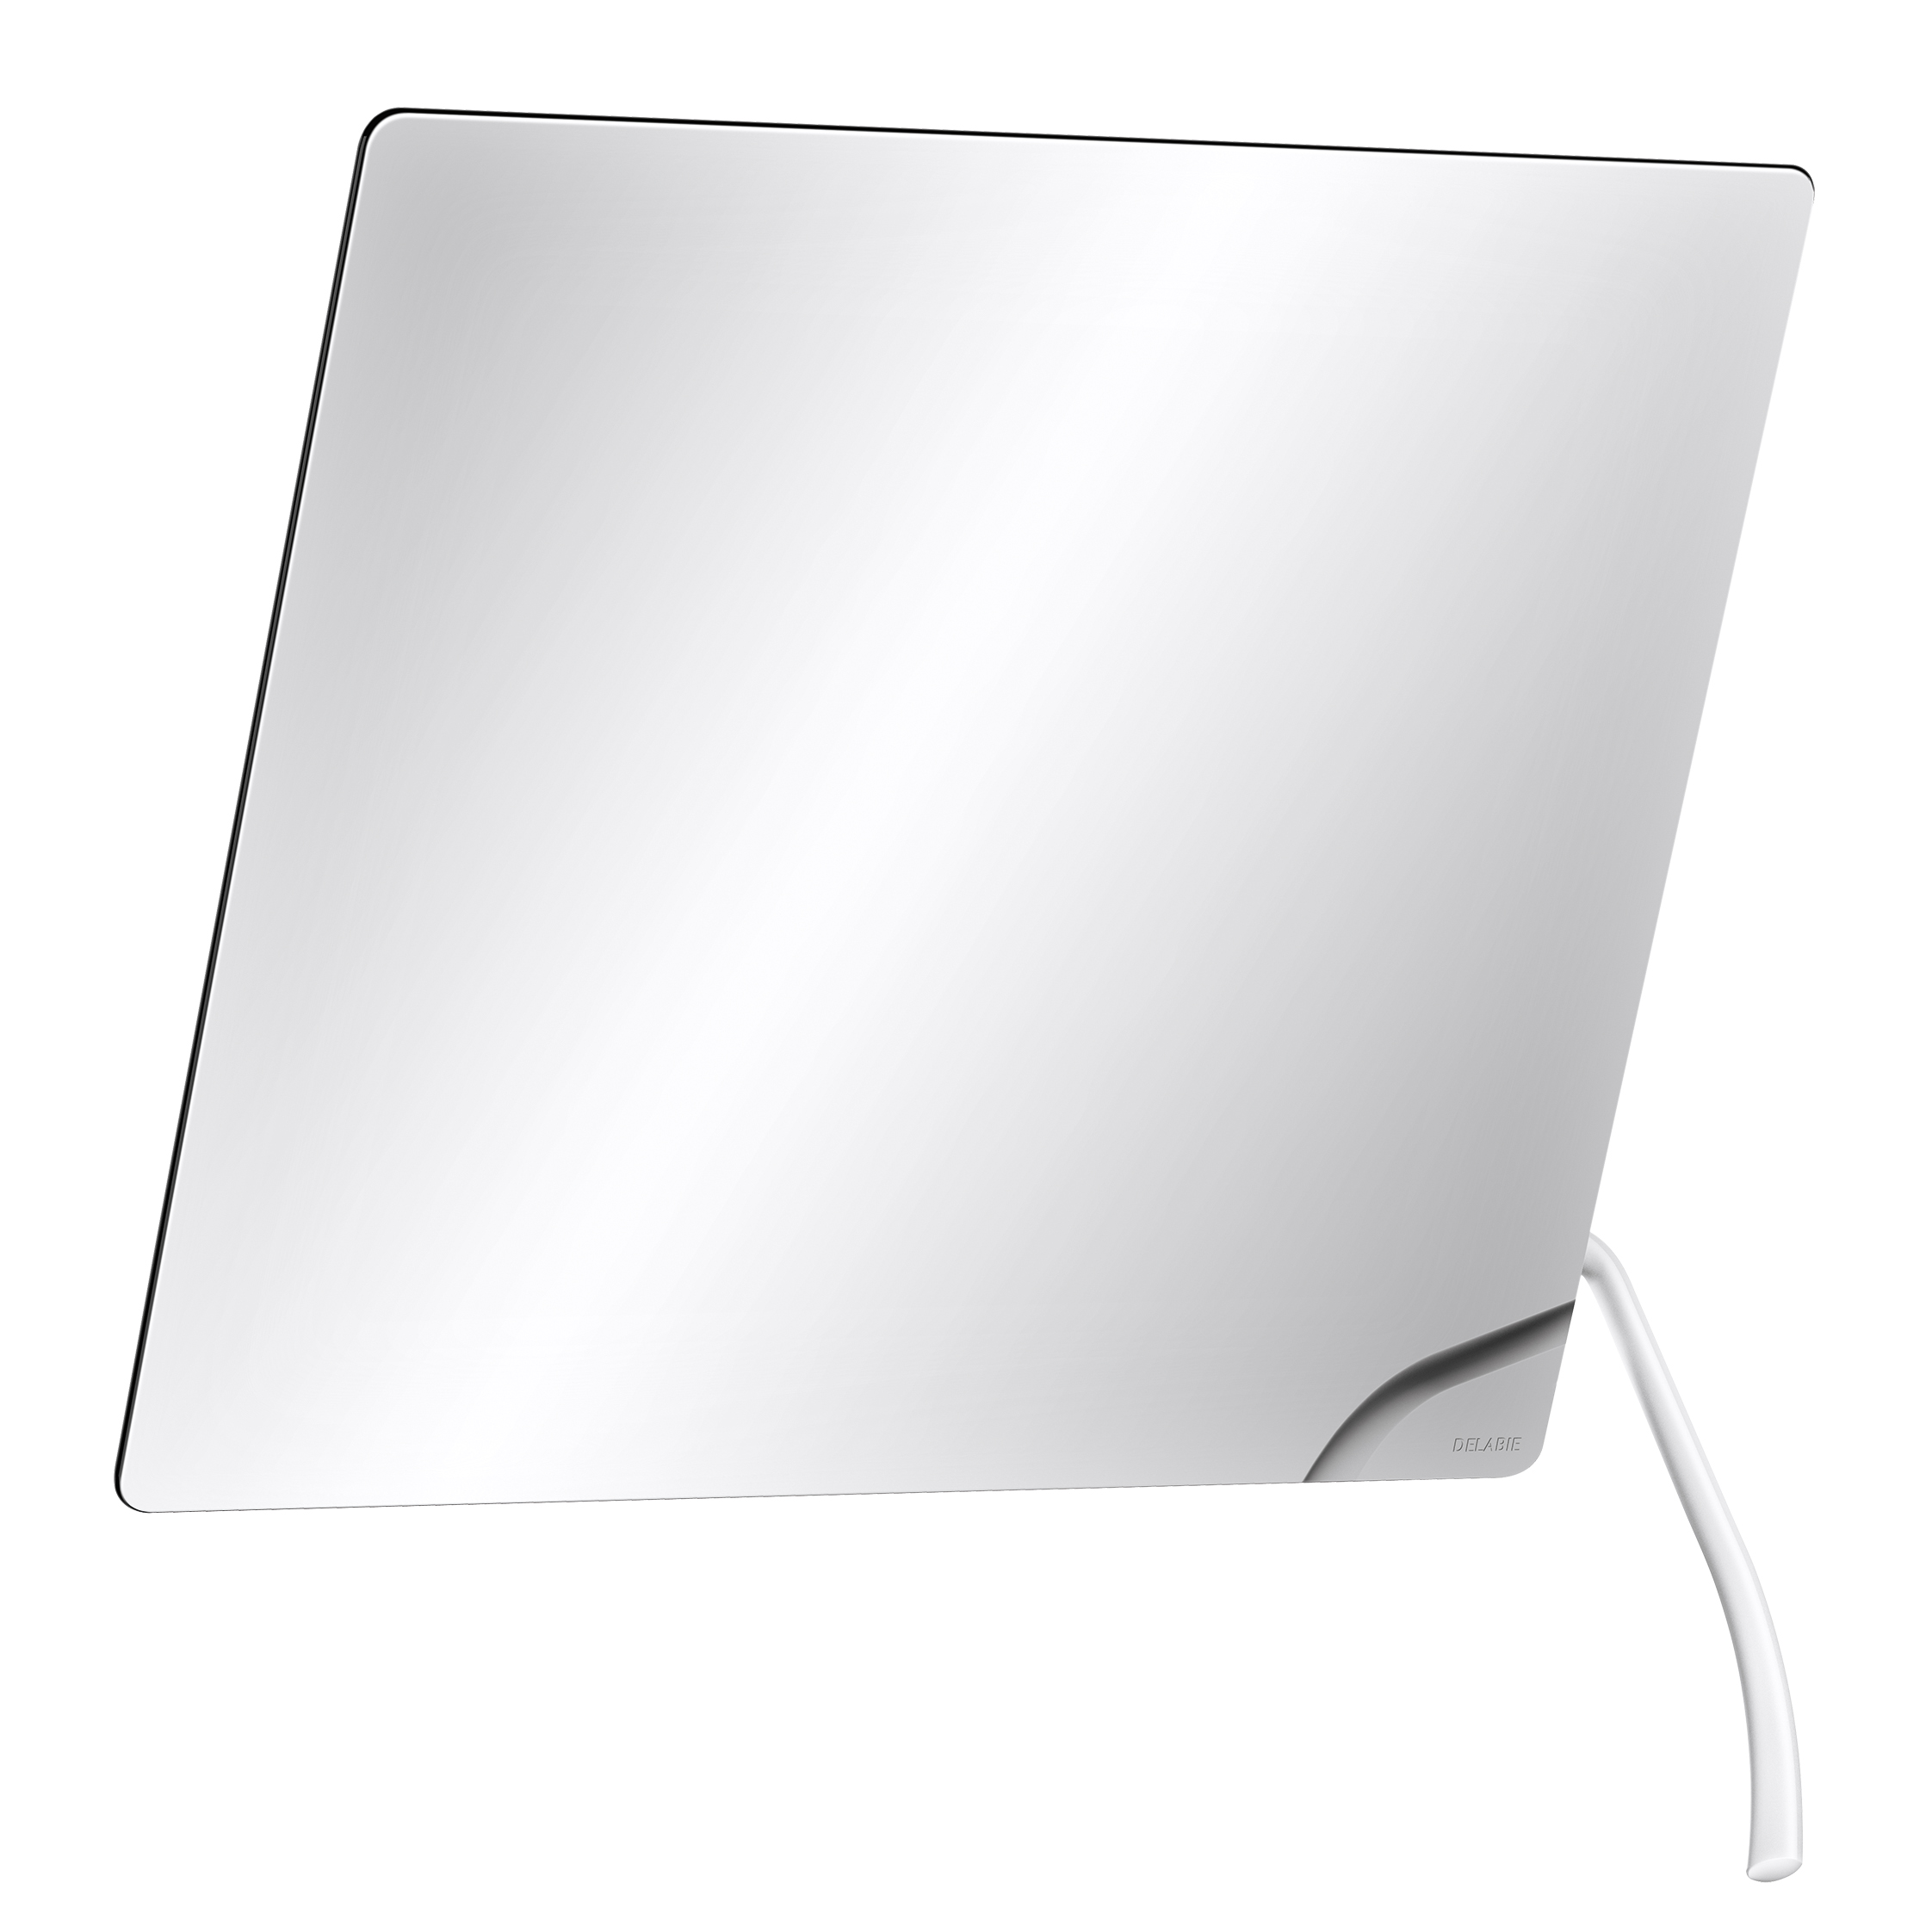 Adjustable mirror 600 x 500mm with white nylon handle